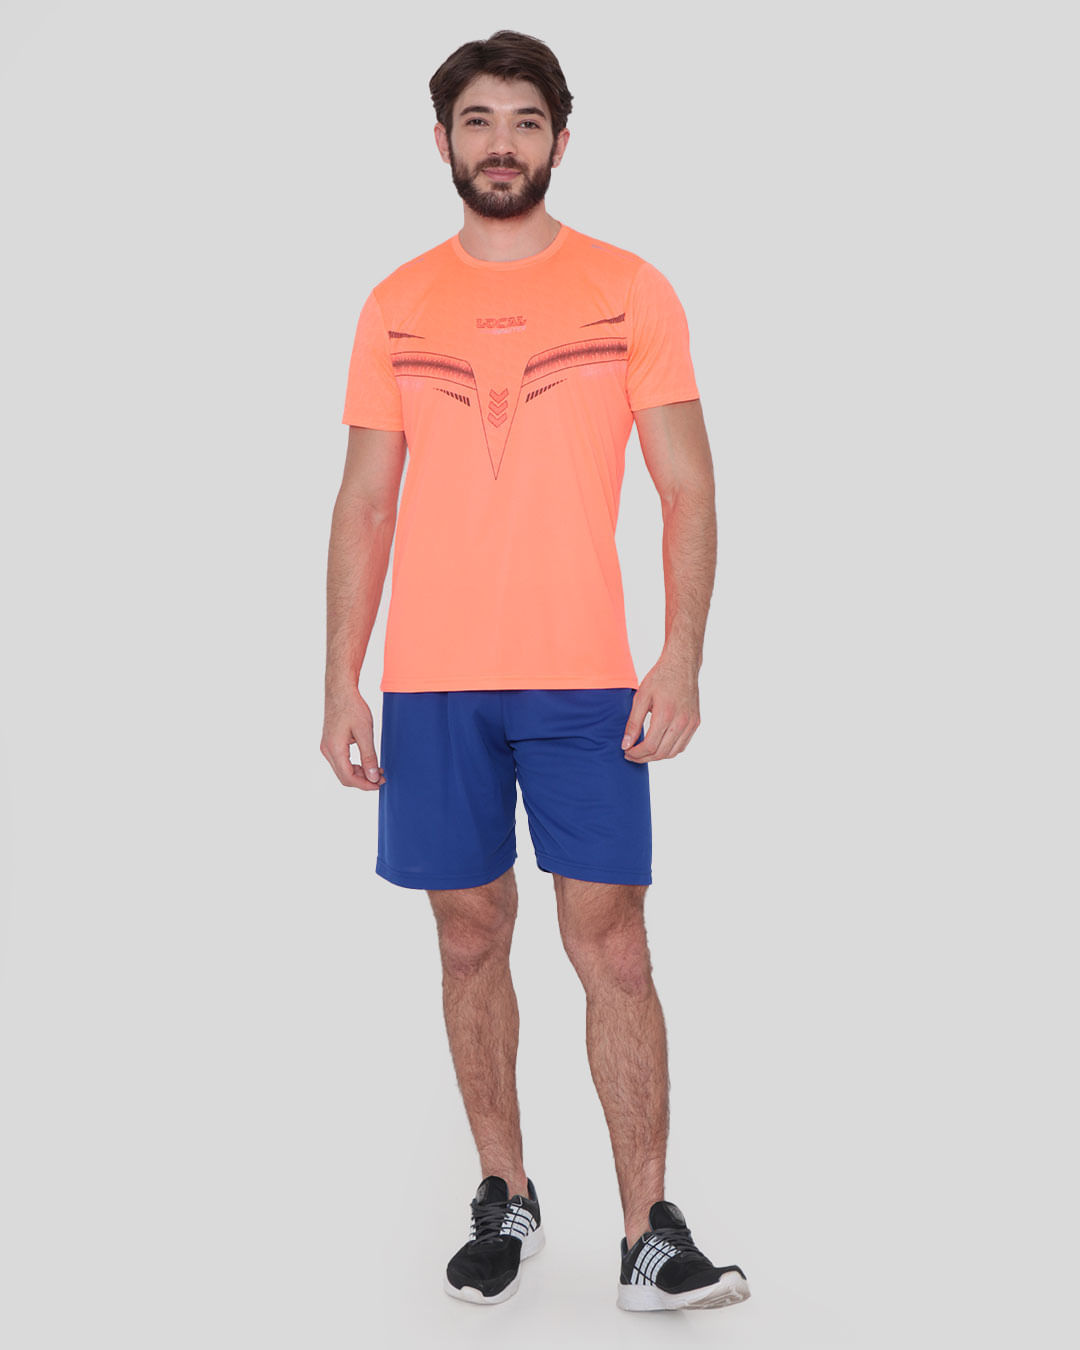 Camiseta Masculina Fitness Neon Laranja